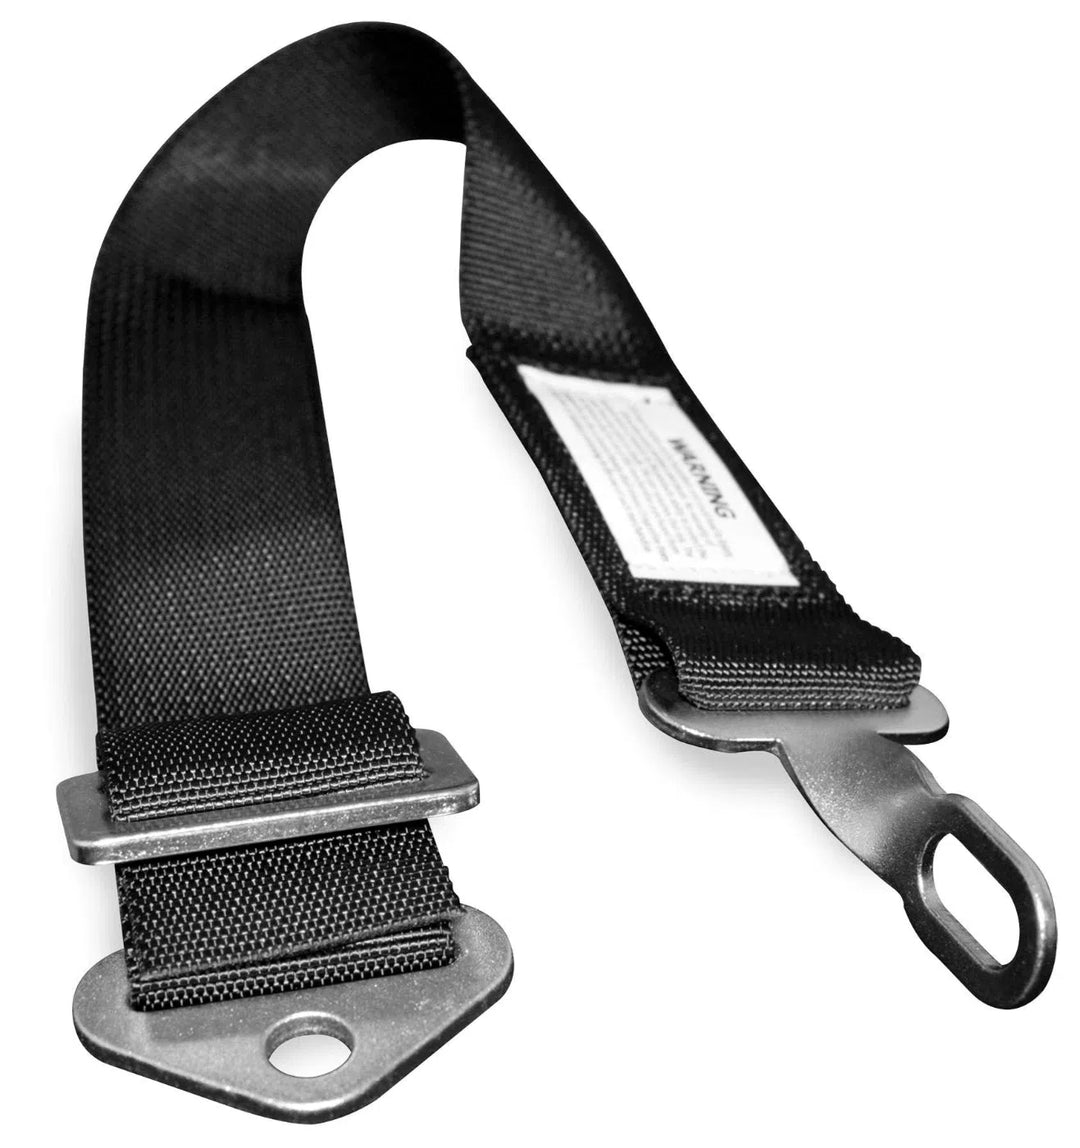 DragonFire Racing 2" Adjustable Harness Sub Belt - Black - 14-0023